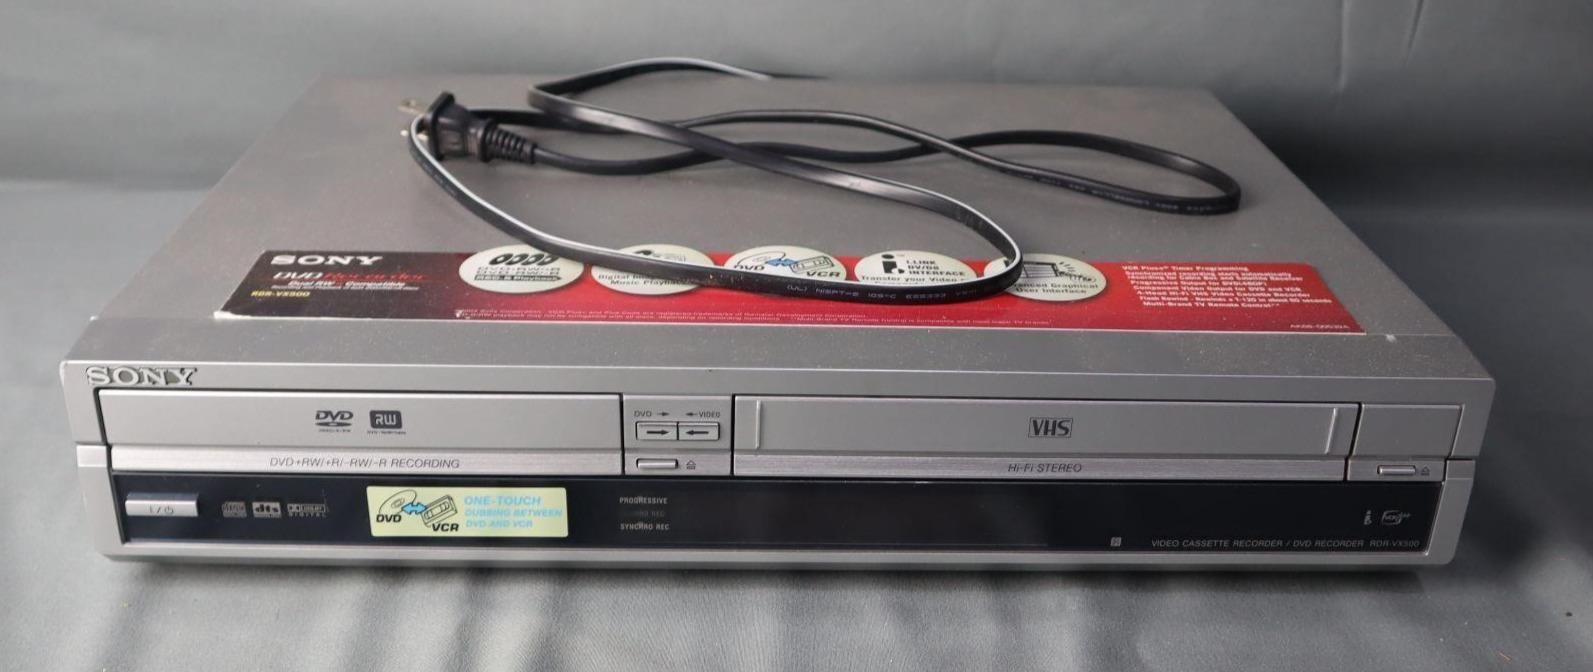 Sony VCR DVD Combo Recorder RDR-VZ500